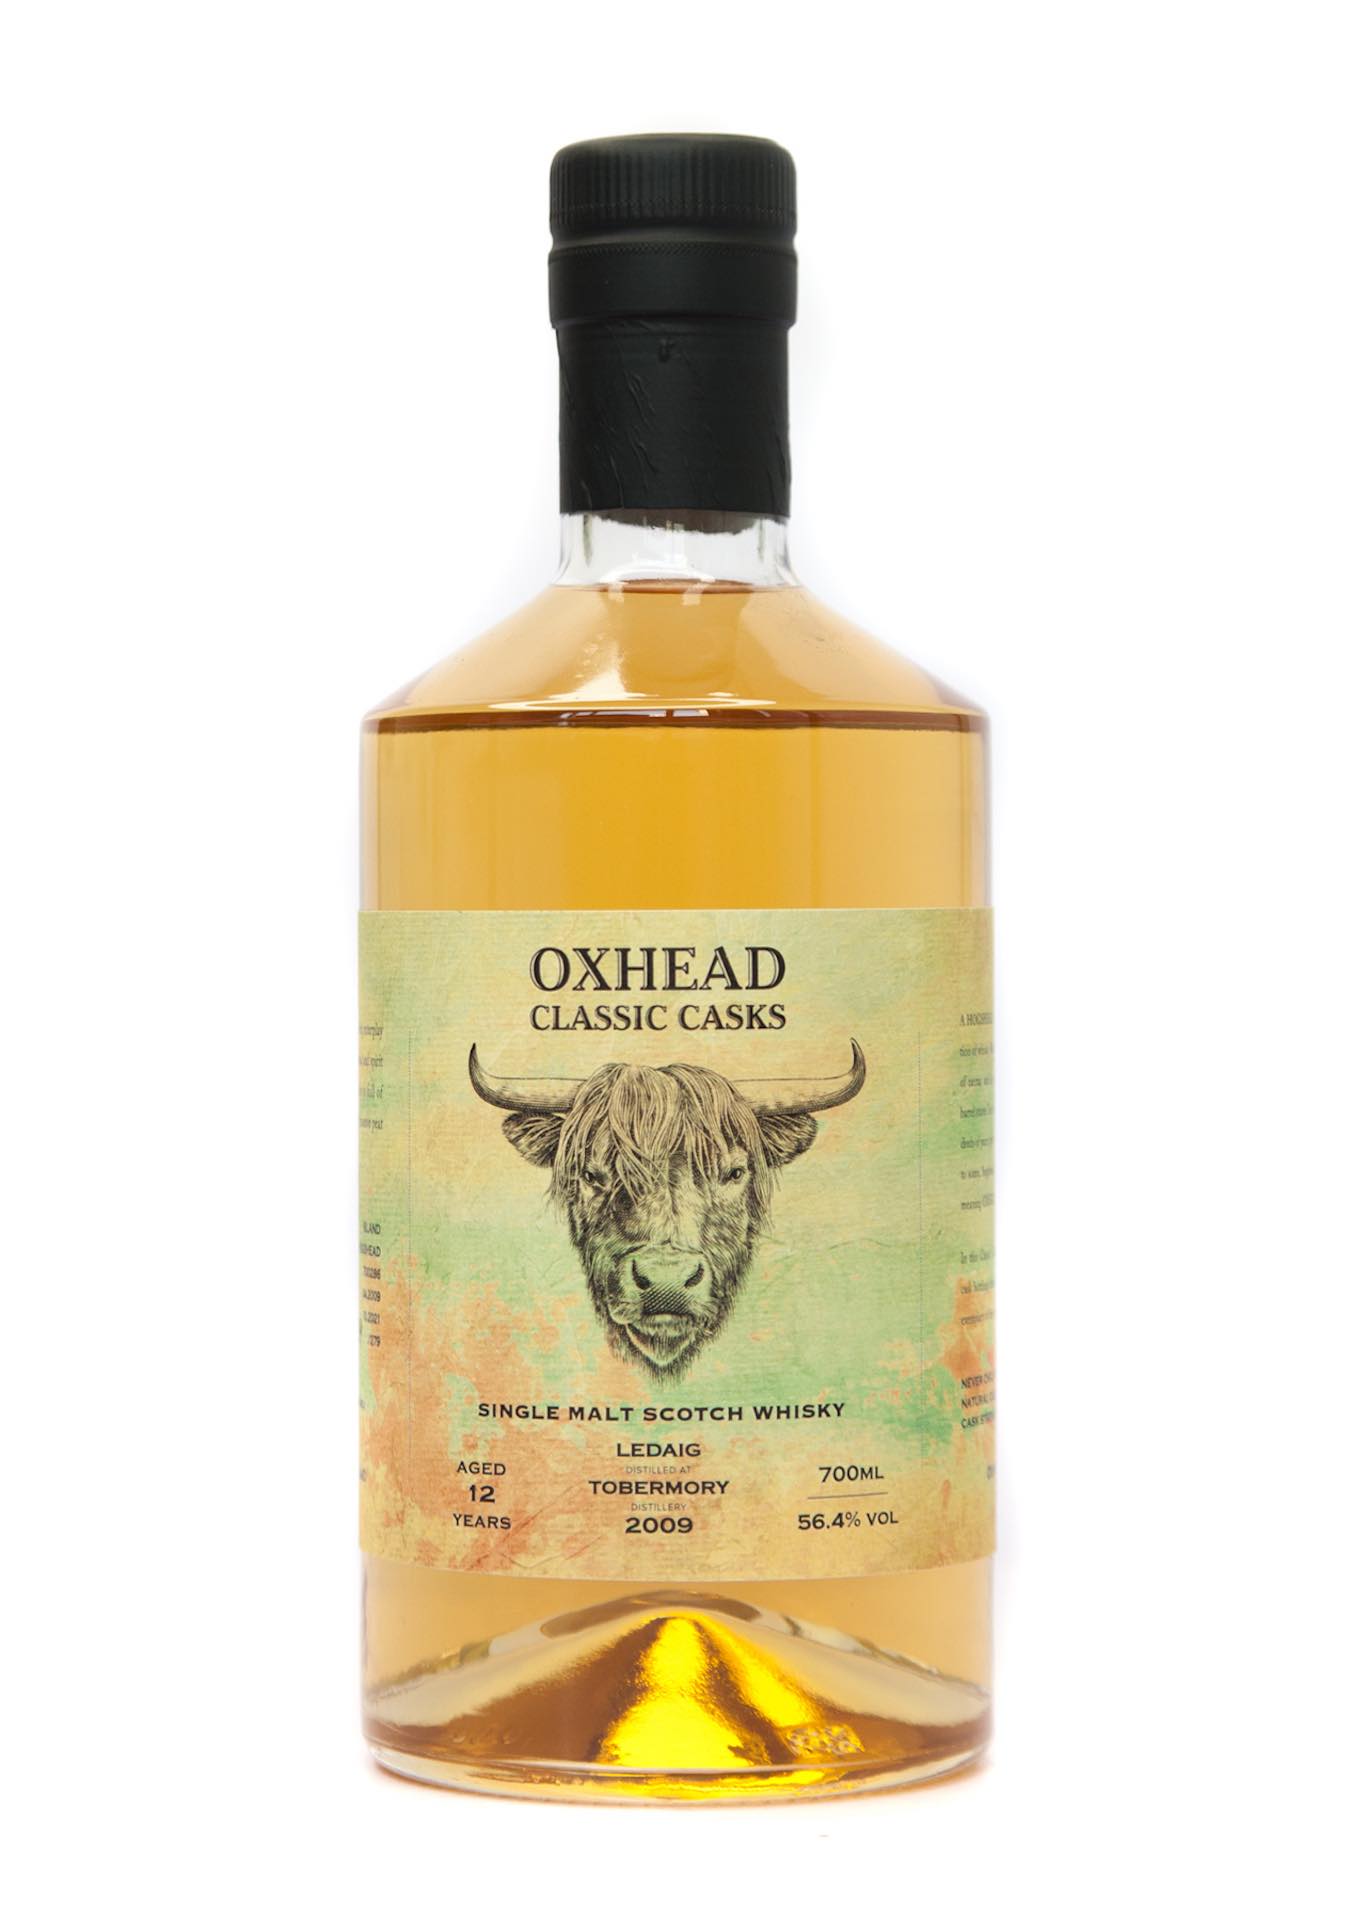 Oxhead Classic Casks: Ledaig 12 Year Old Single Malt Scotch Whisky